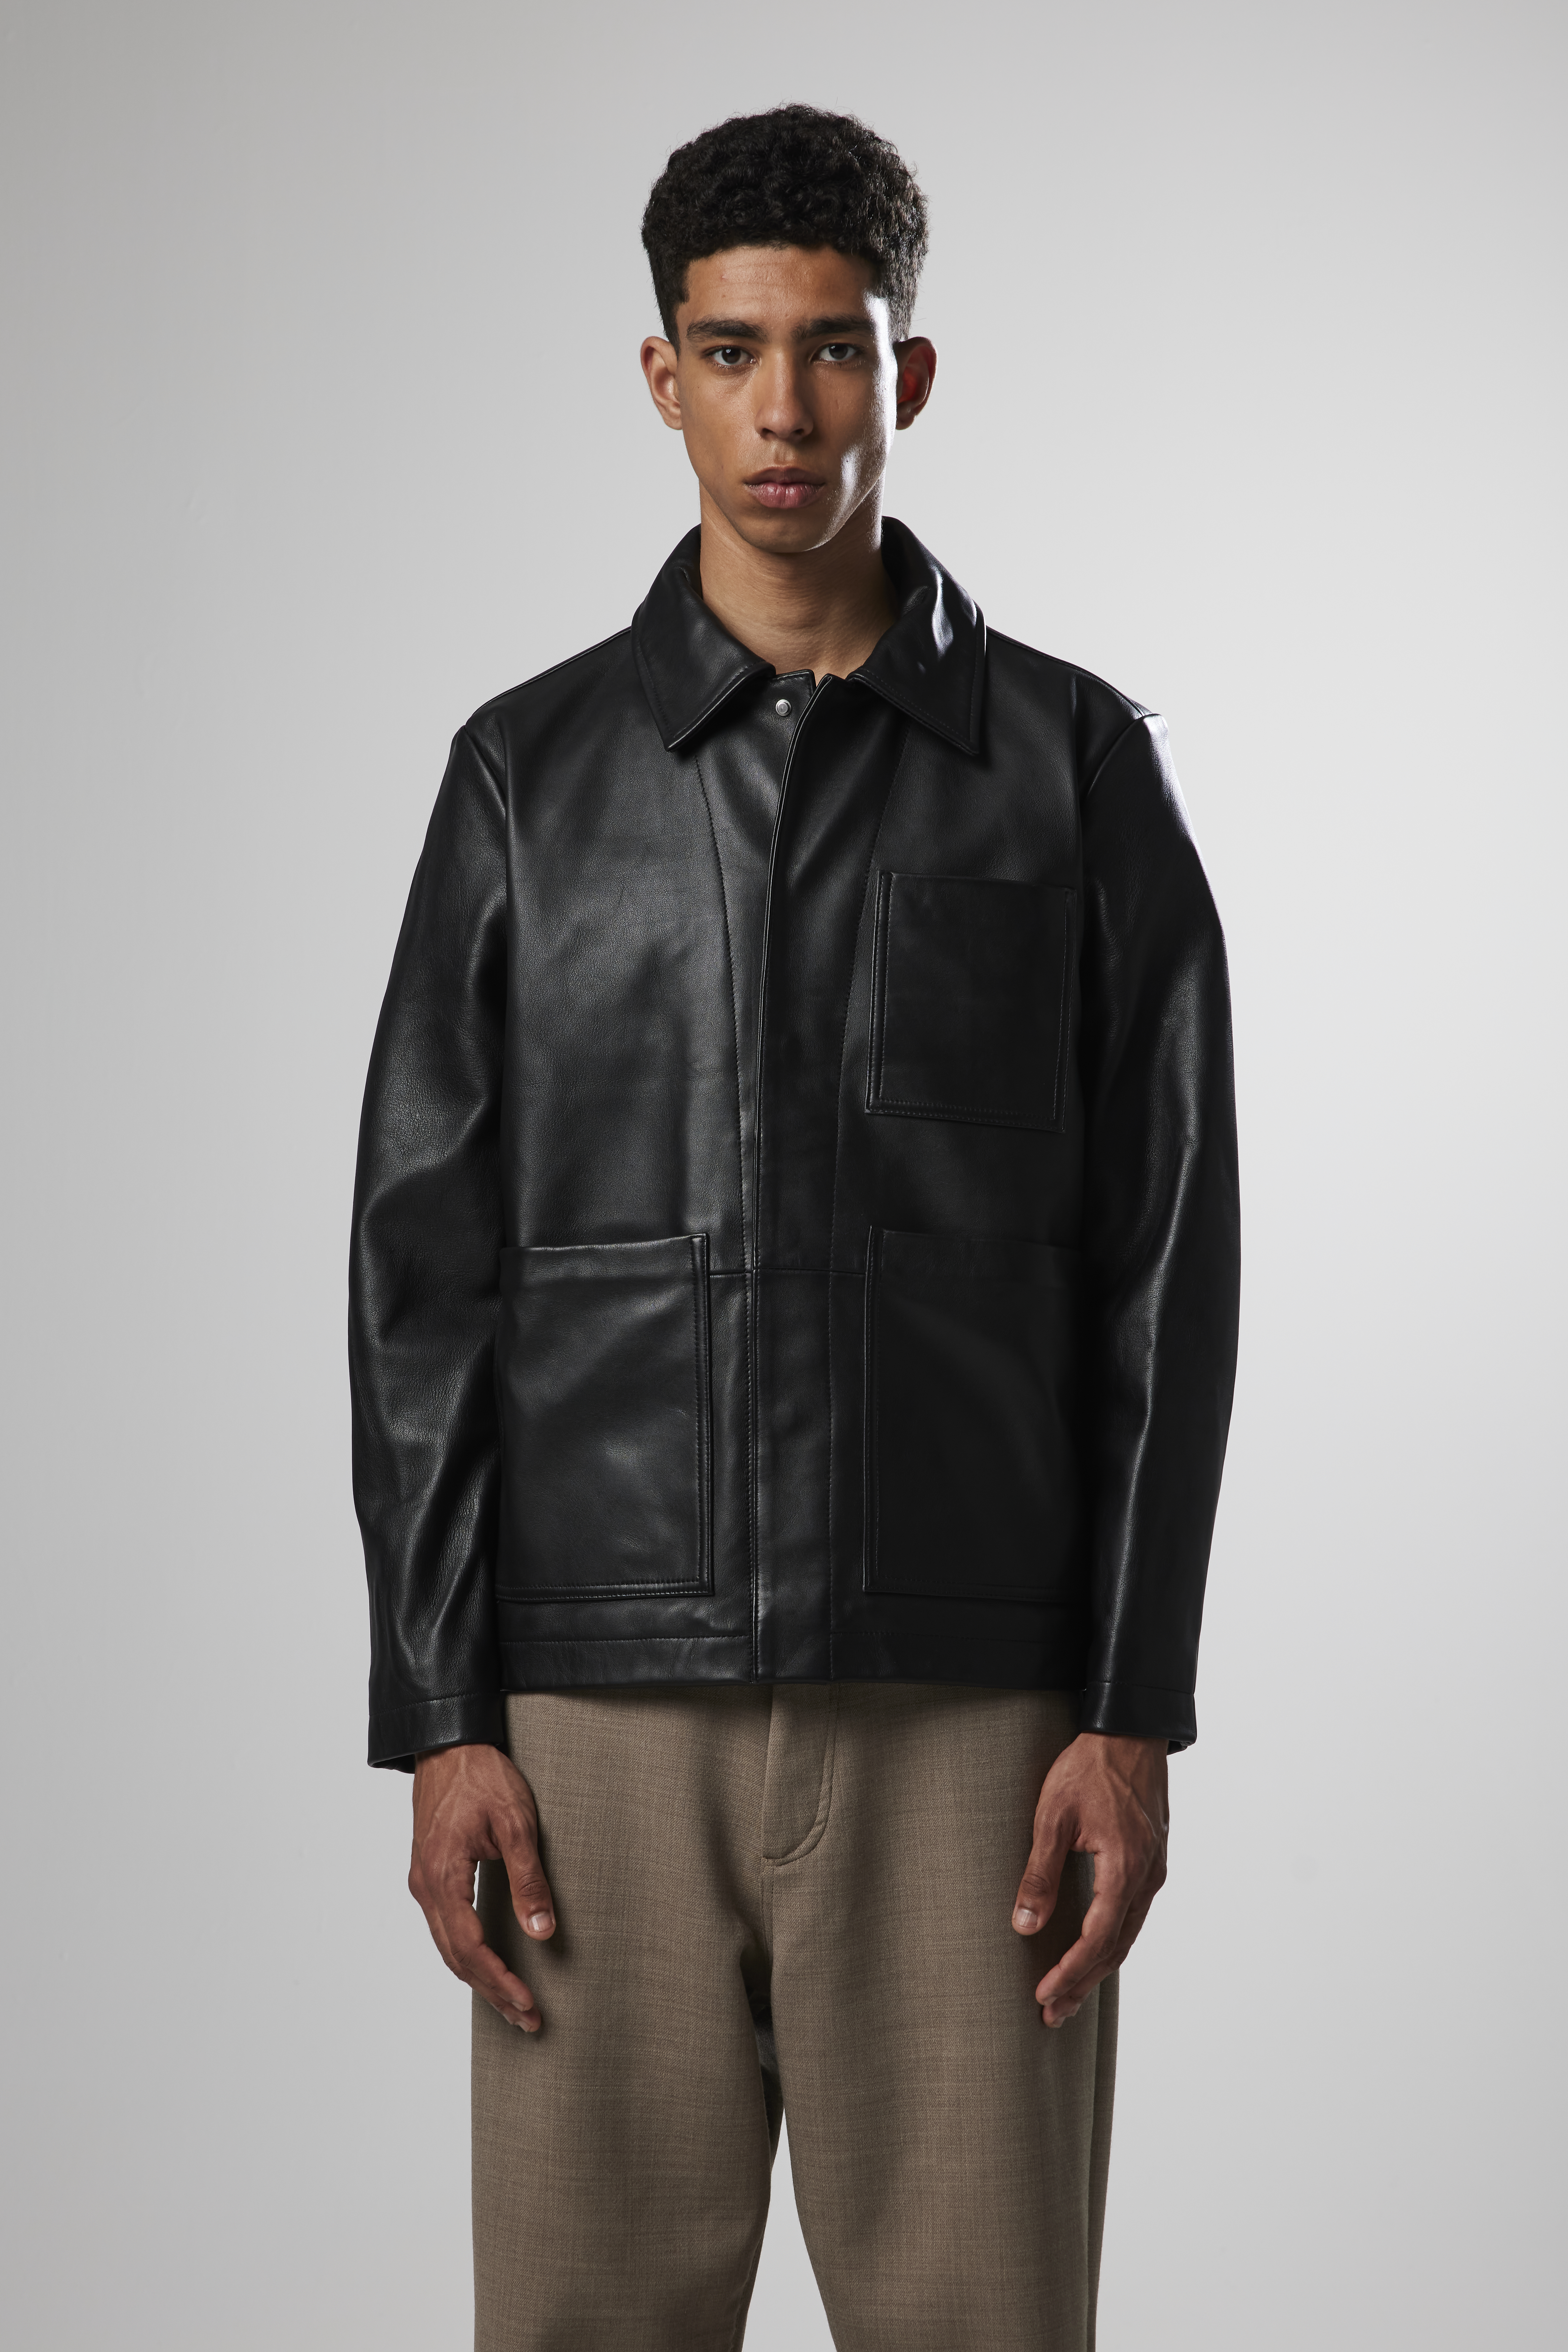 Skjold 8178 men's jacket - Black - Buy online at NN.07®